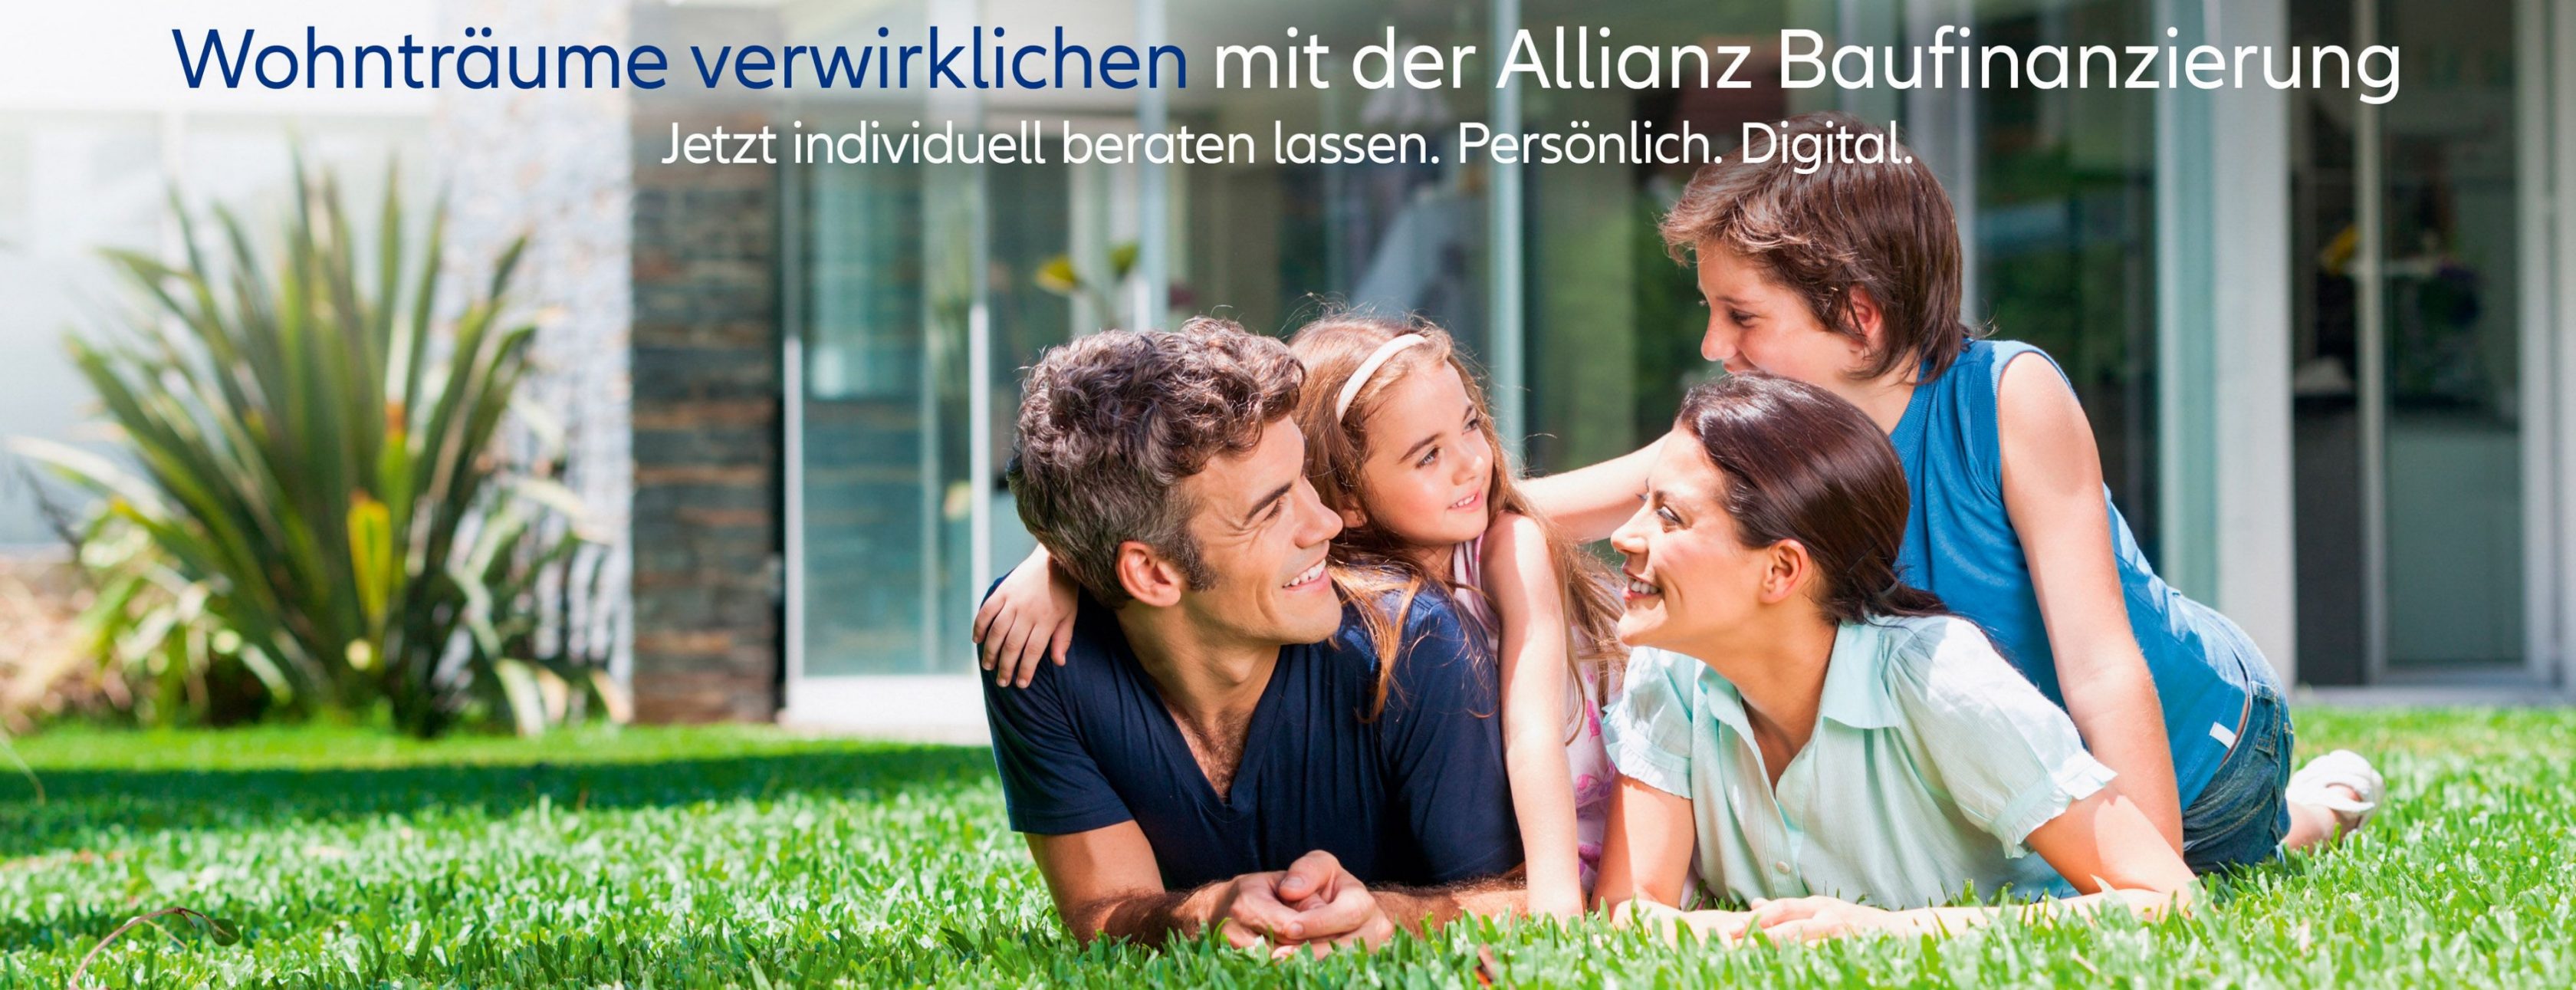 Allianz Versicherung Alexander Becker Bremen - Baufinanzierung 